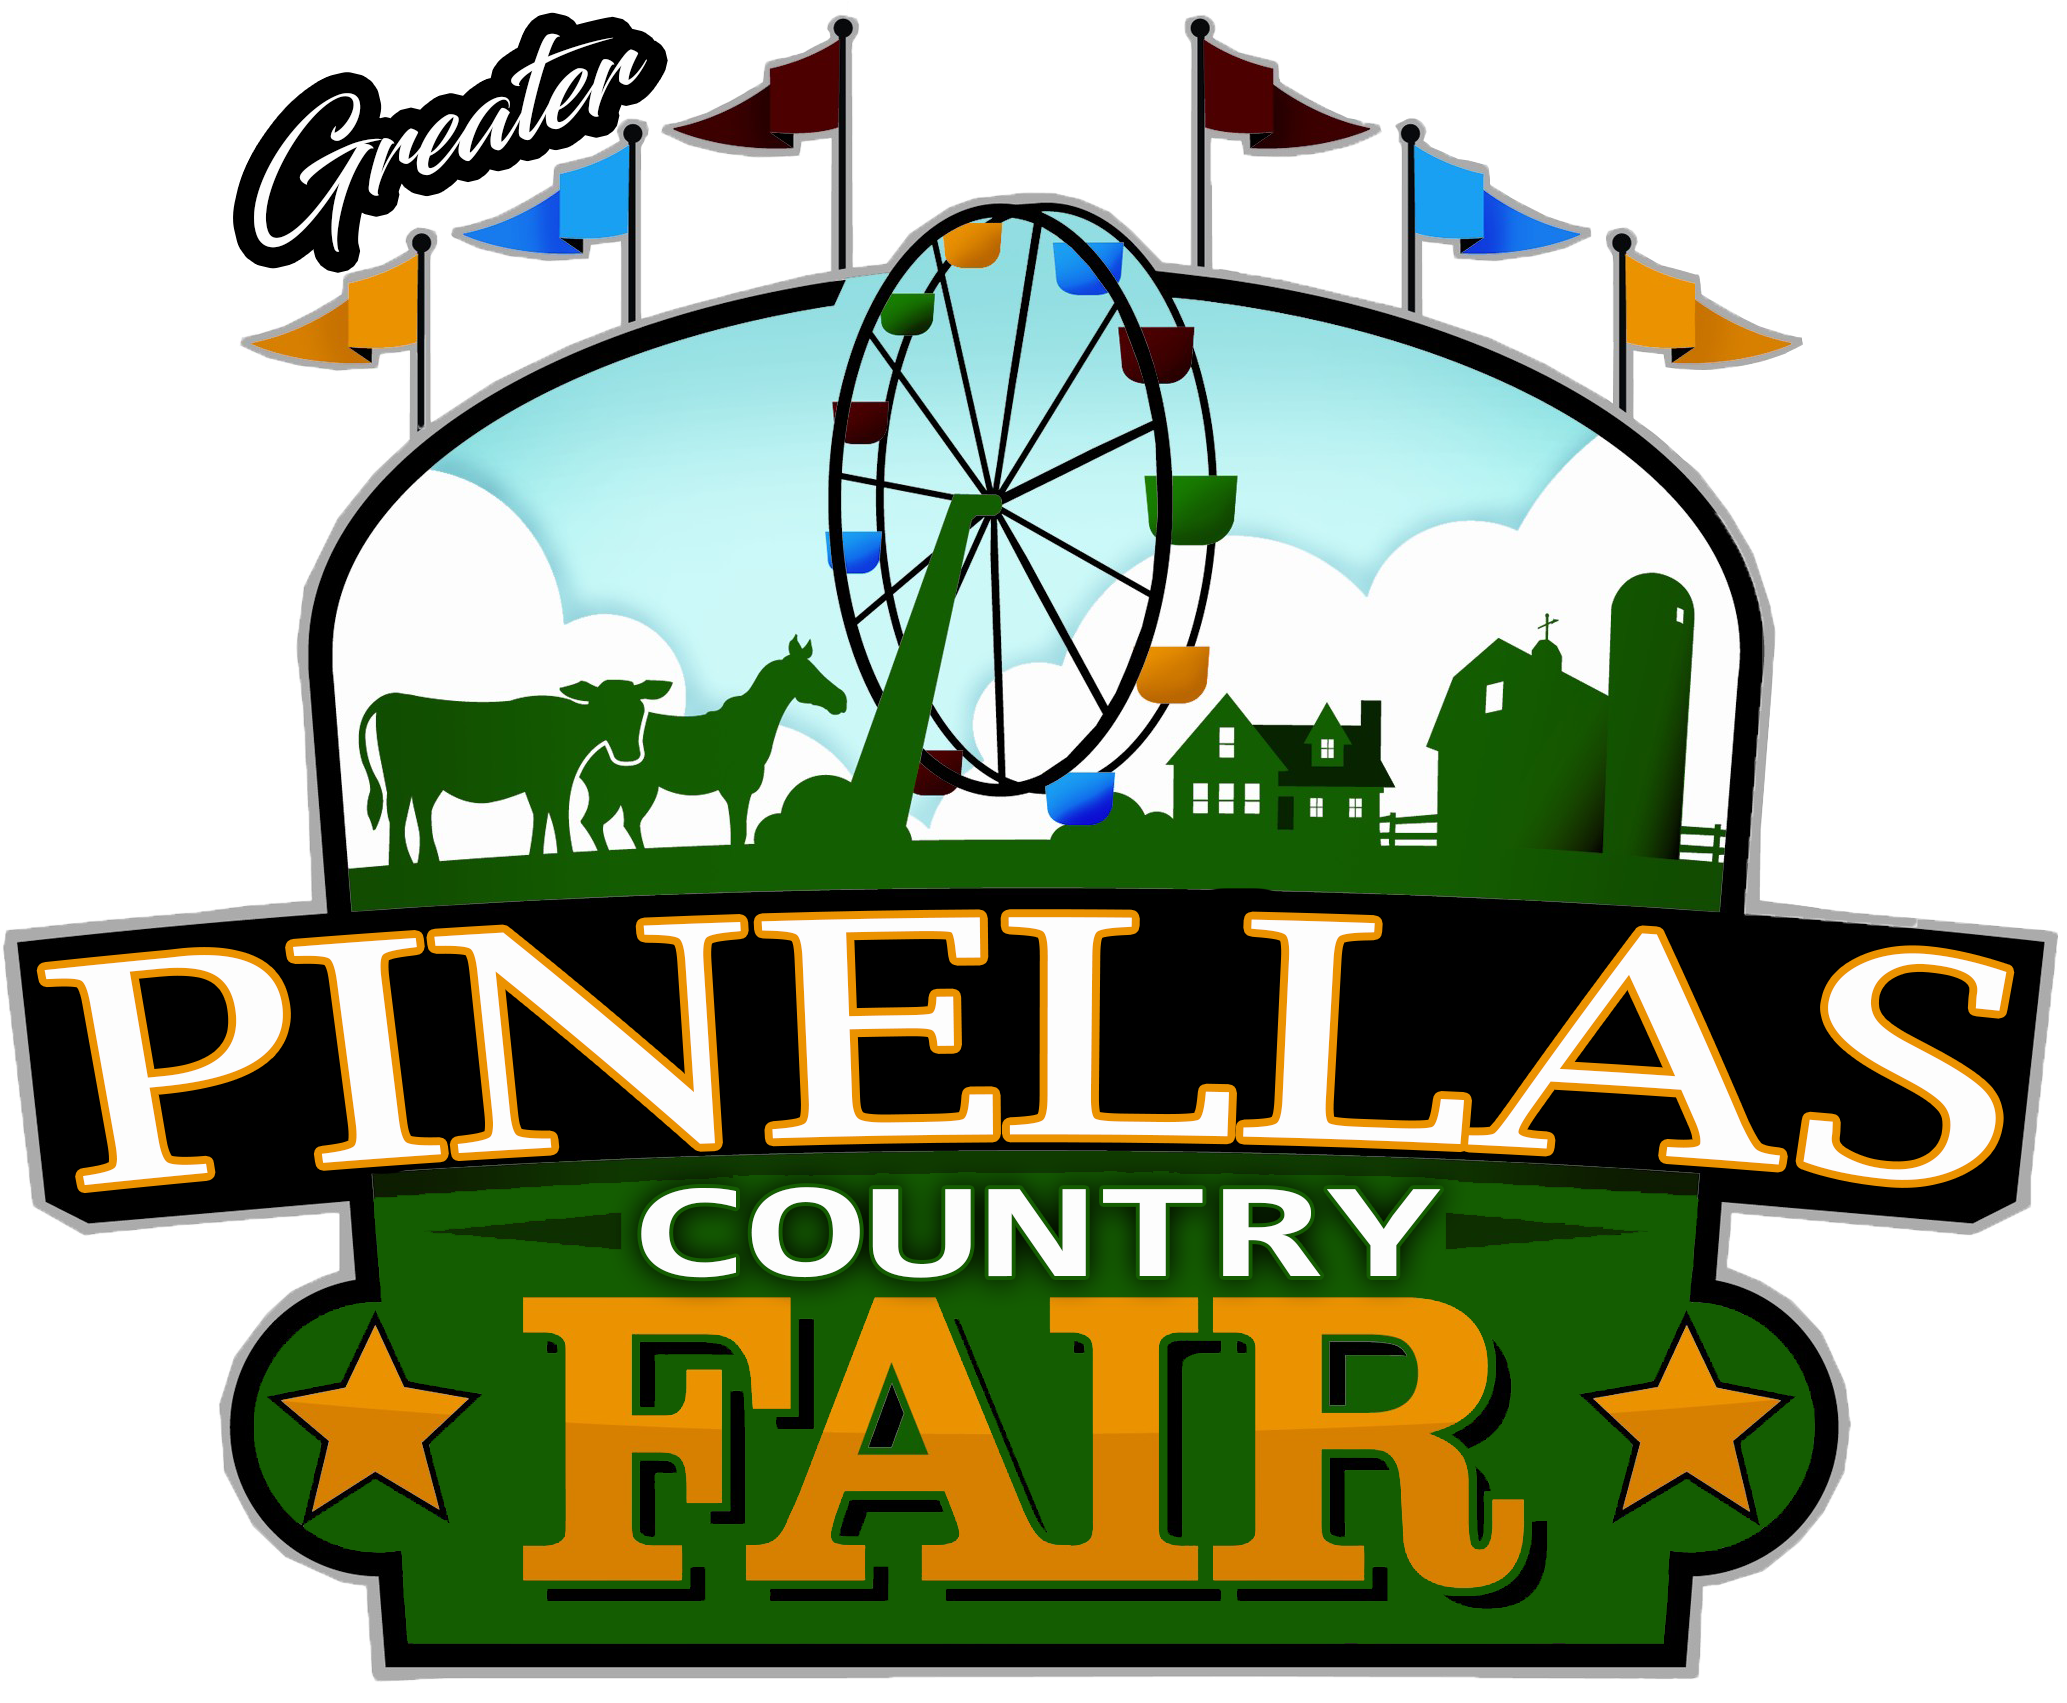 About The Pinellas Country Fair - Williamson County Fair Board (2100x1702)